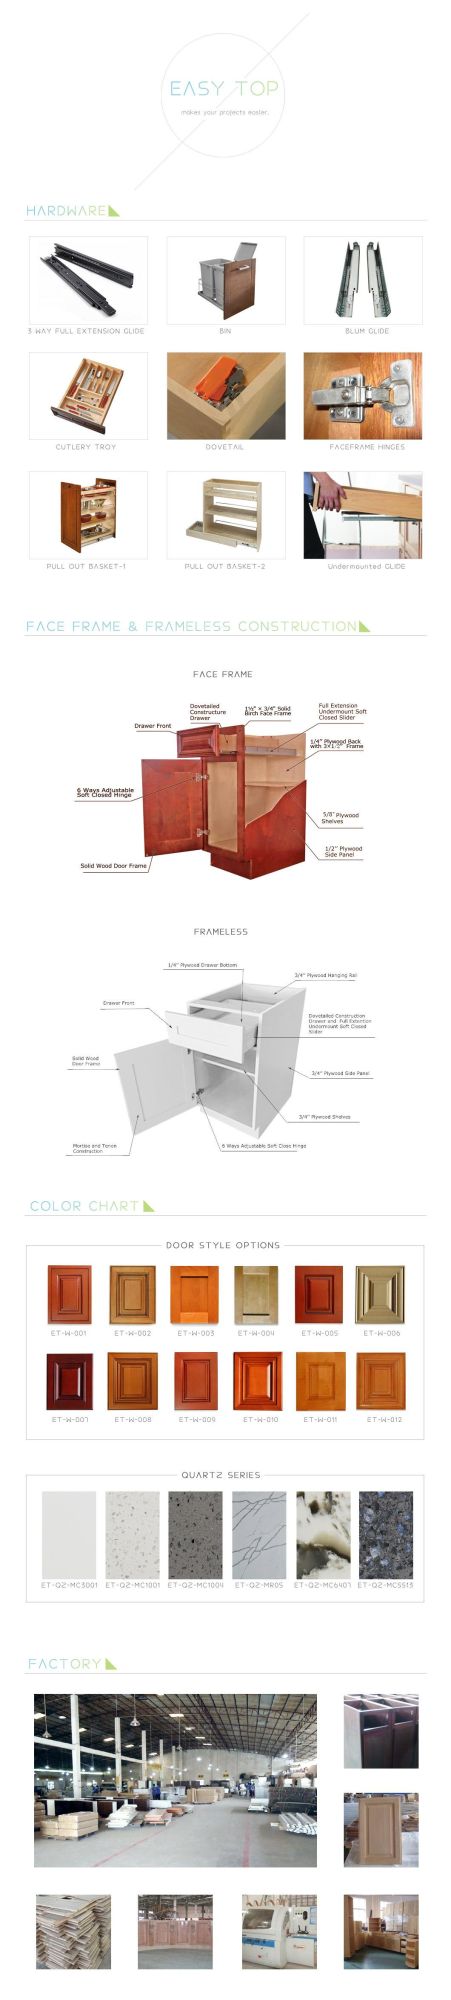 Luxury European Style Customize Kitchen Cabinet Designs New Model Waterproof Solid Wood Modular Kitchen Cabinet